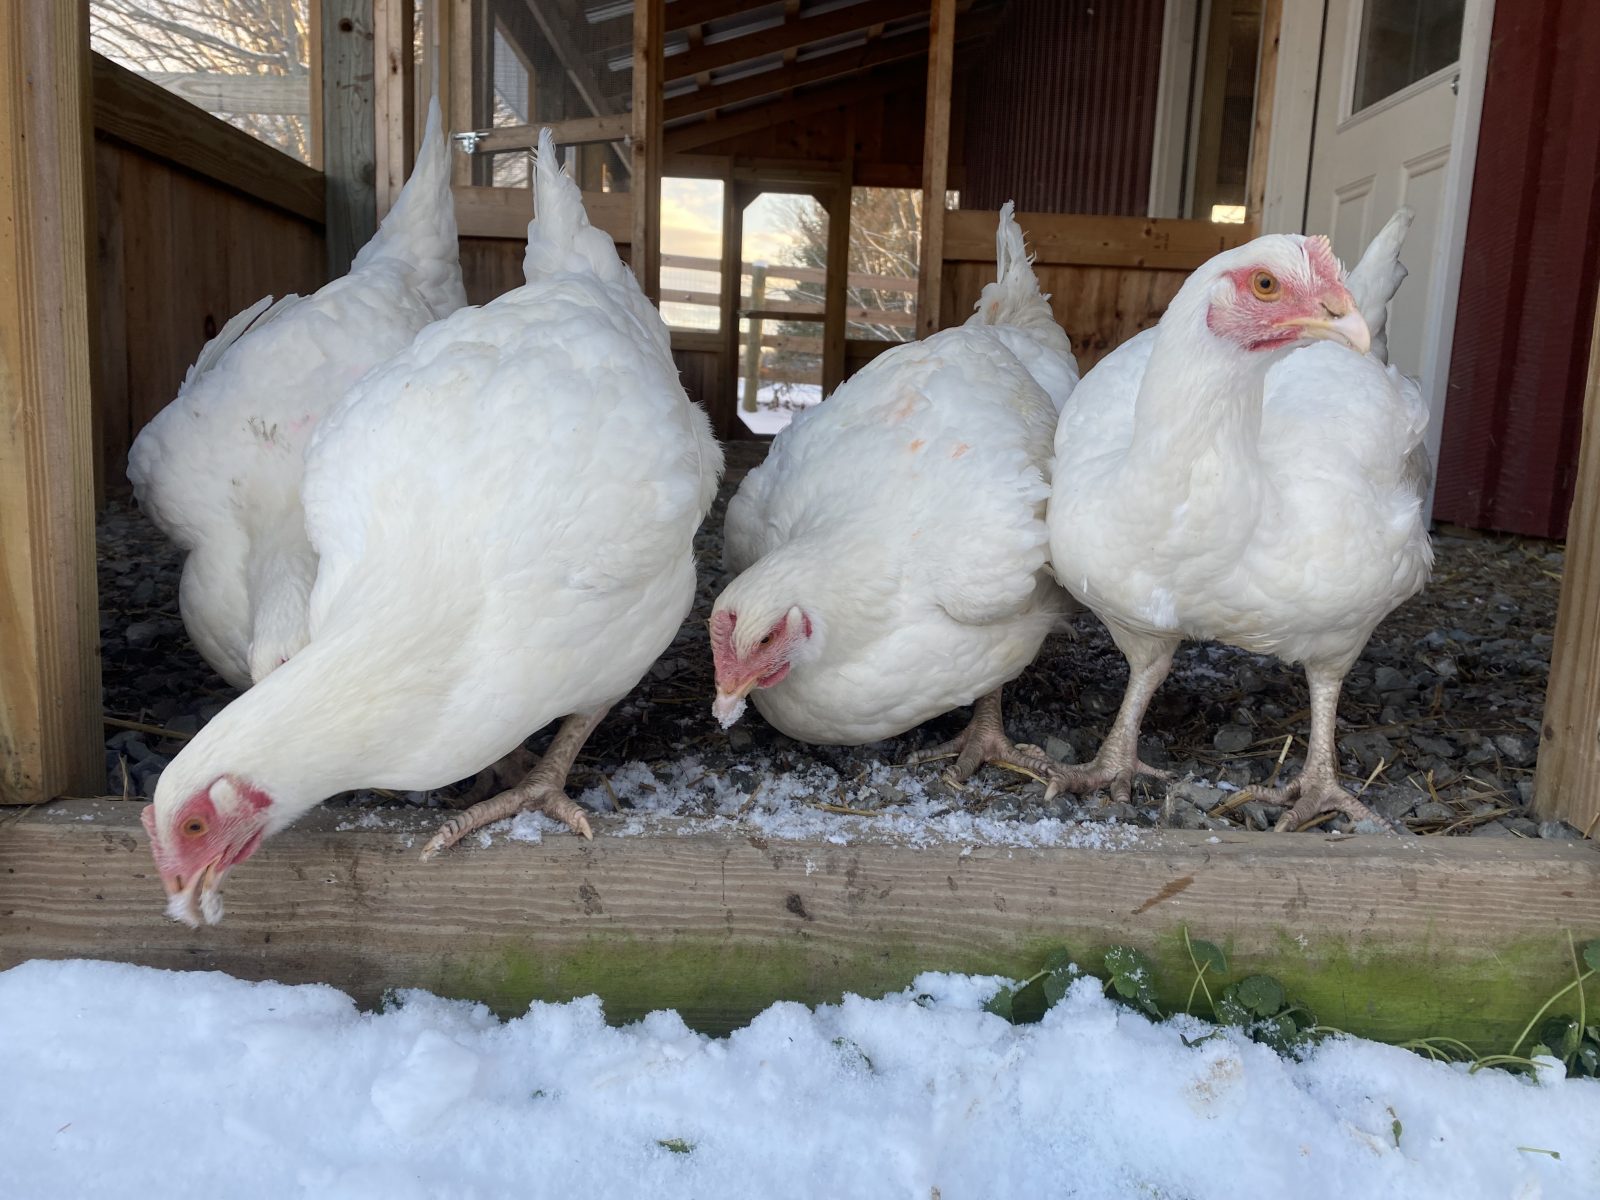 Cornish cross chickens eating snow at Farm Sanctuary